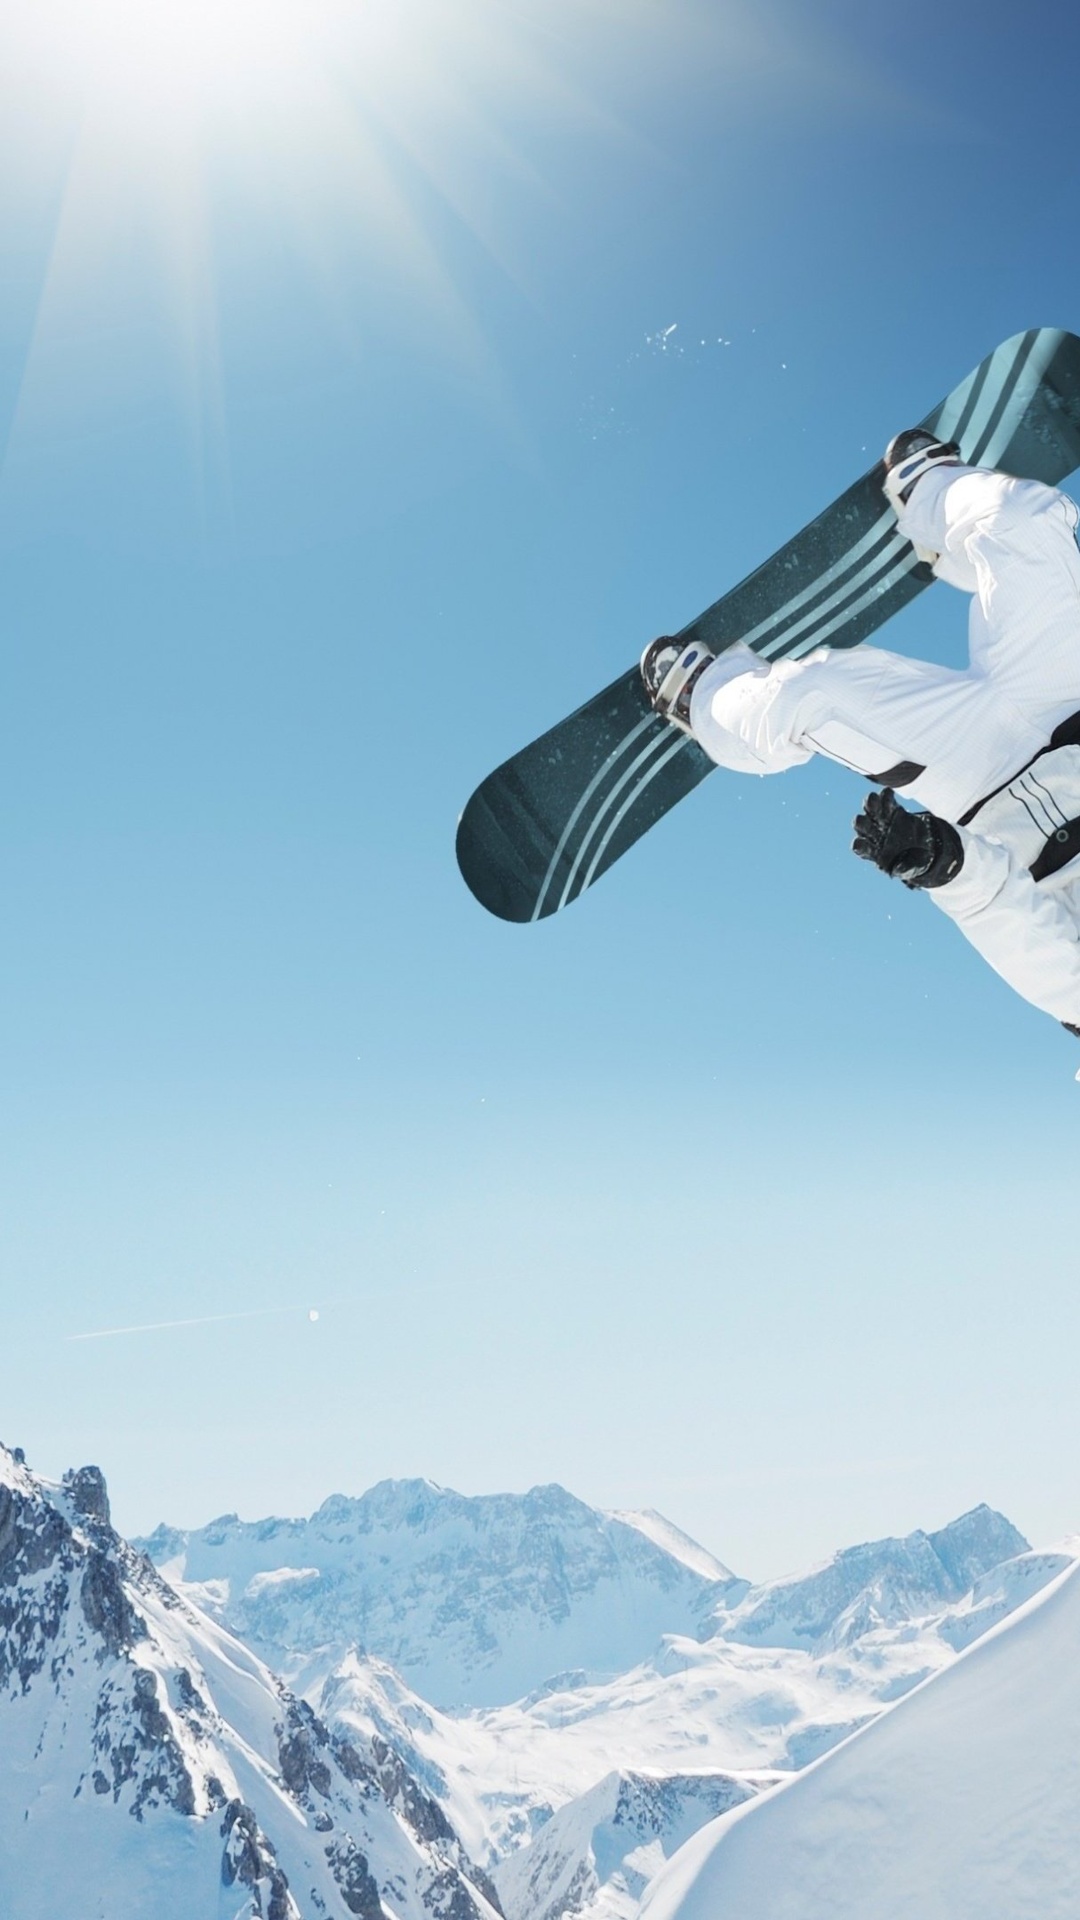 Extreme Snowboarding 4k Ultra HD Wallpaper